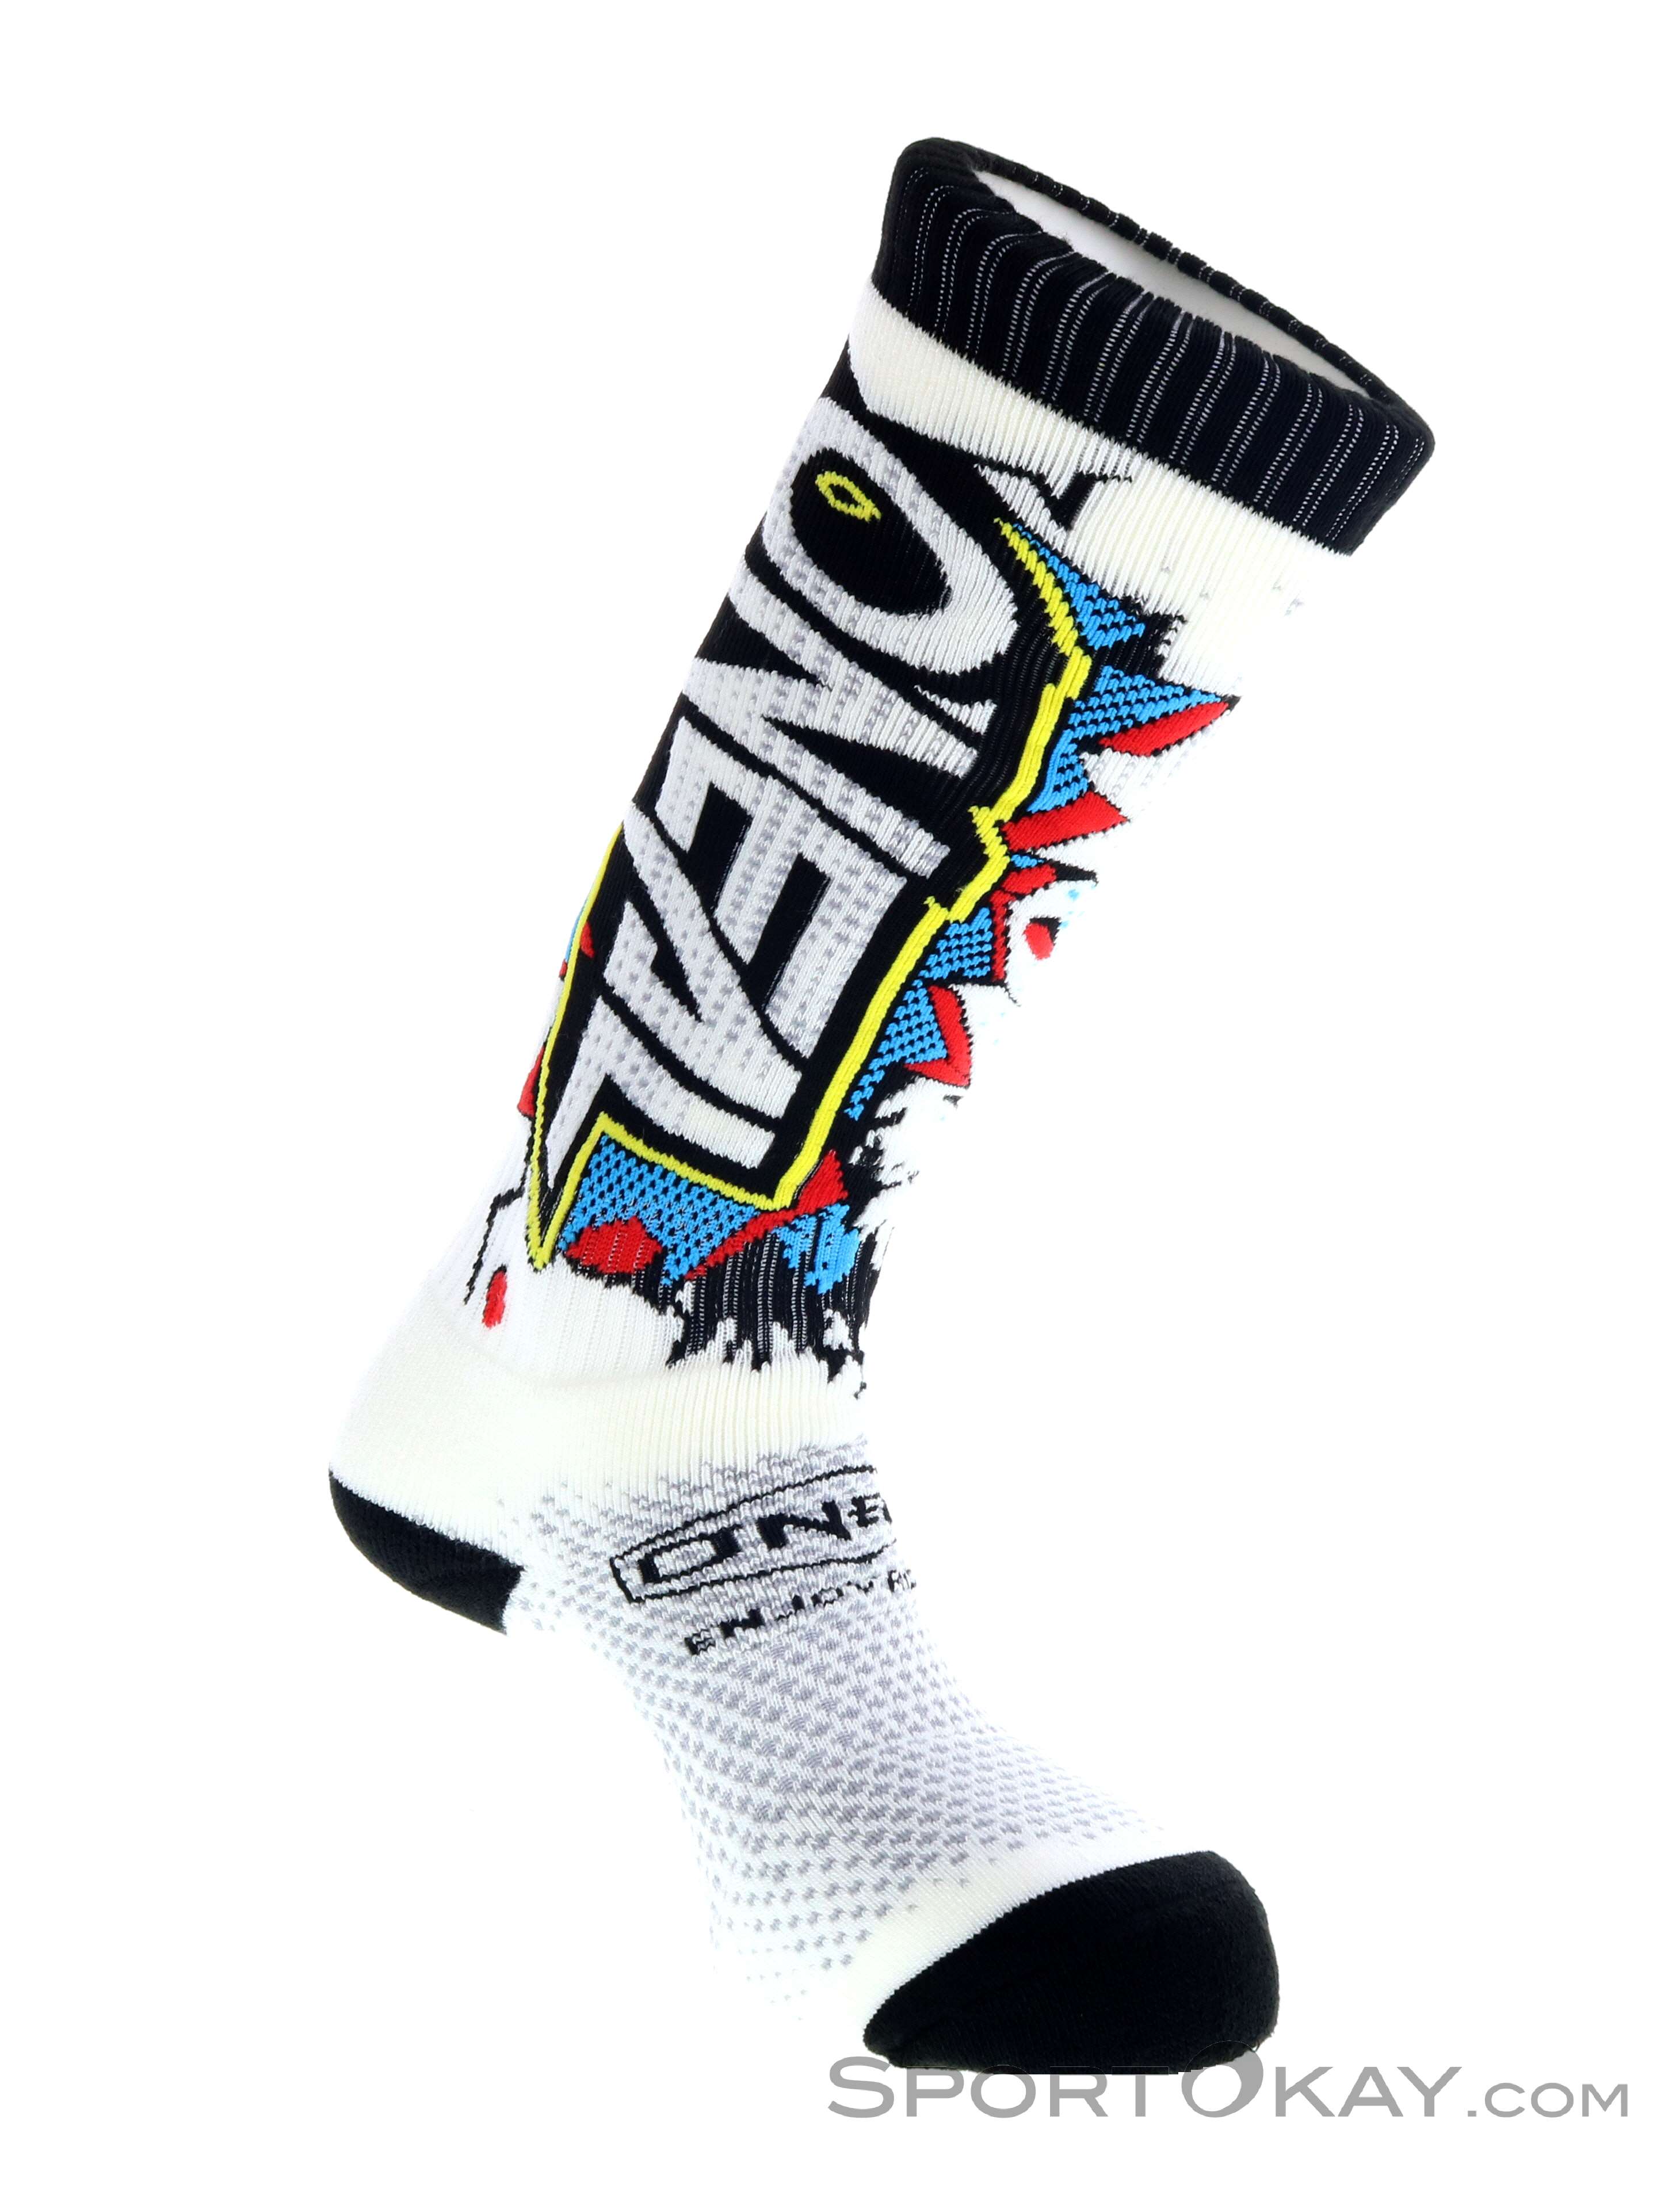 Ortovox - Ski Compression Long calcetines de esquí hombre gris mezcla